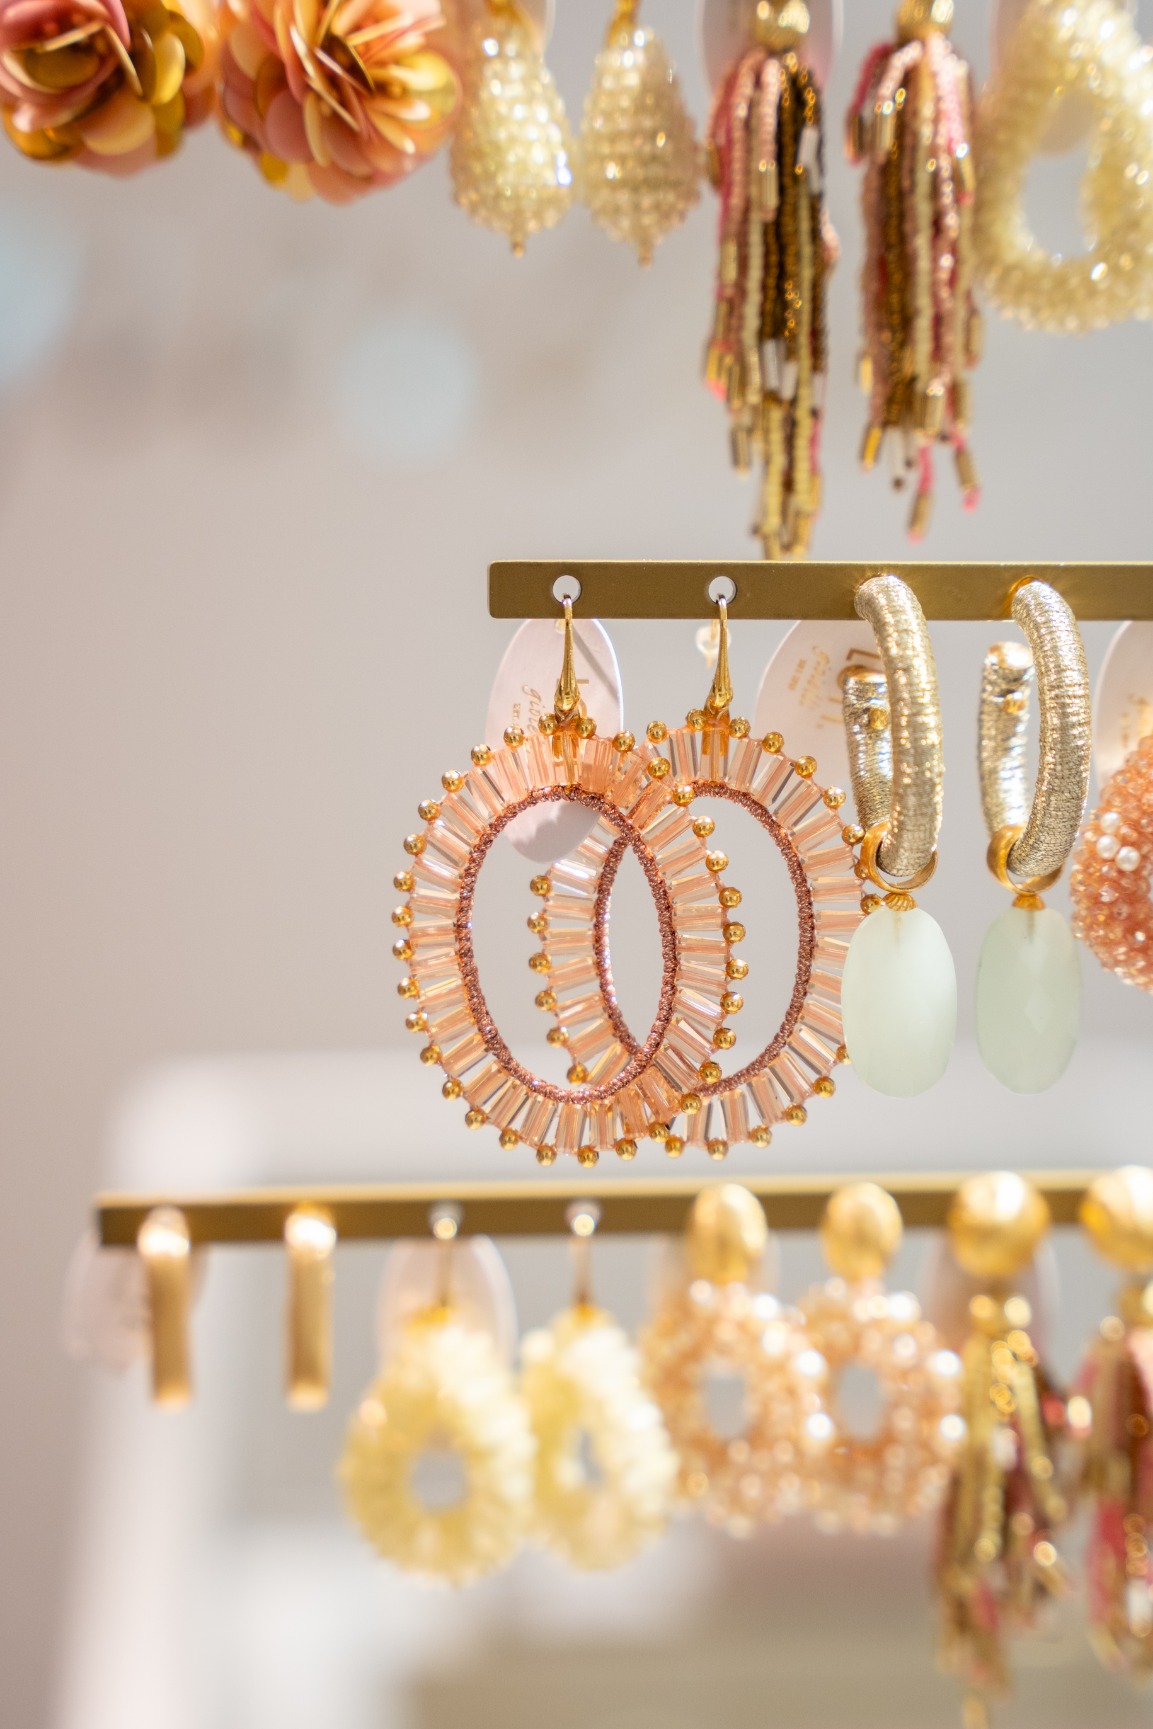 Old Pink Earrings Tonal Naomi Oval L lott-theme.productDescriptionPage.SEO.byTheBrand